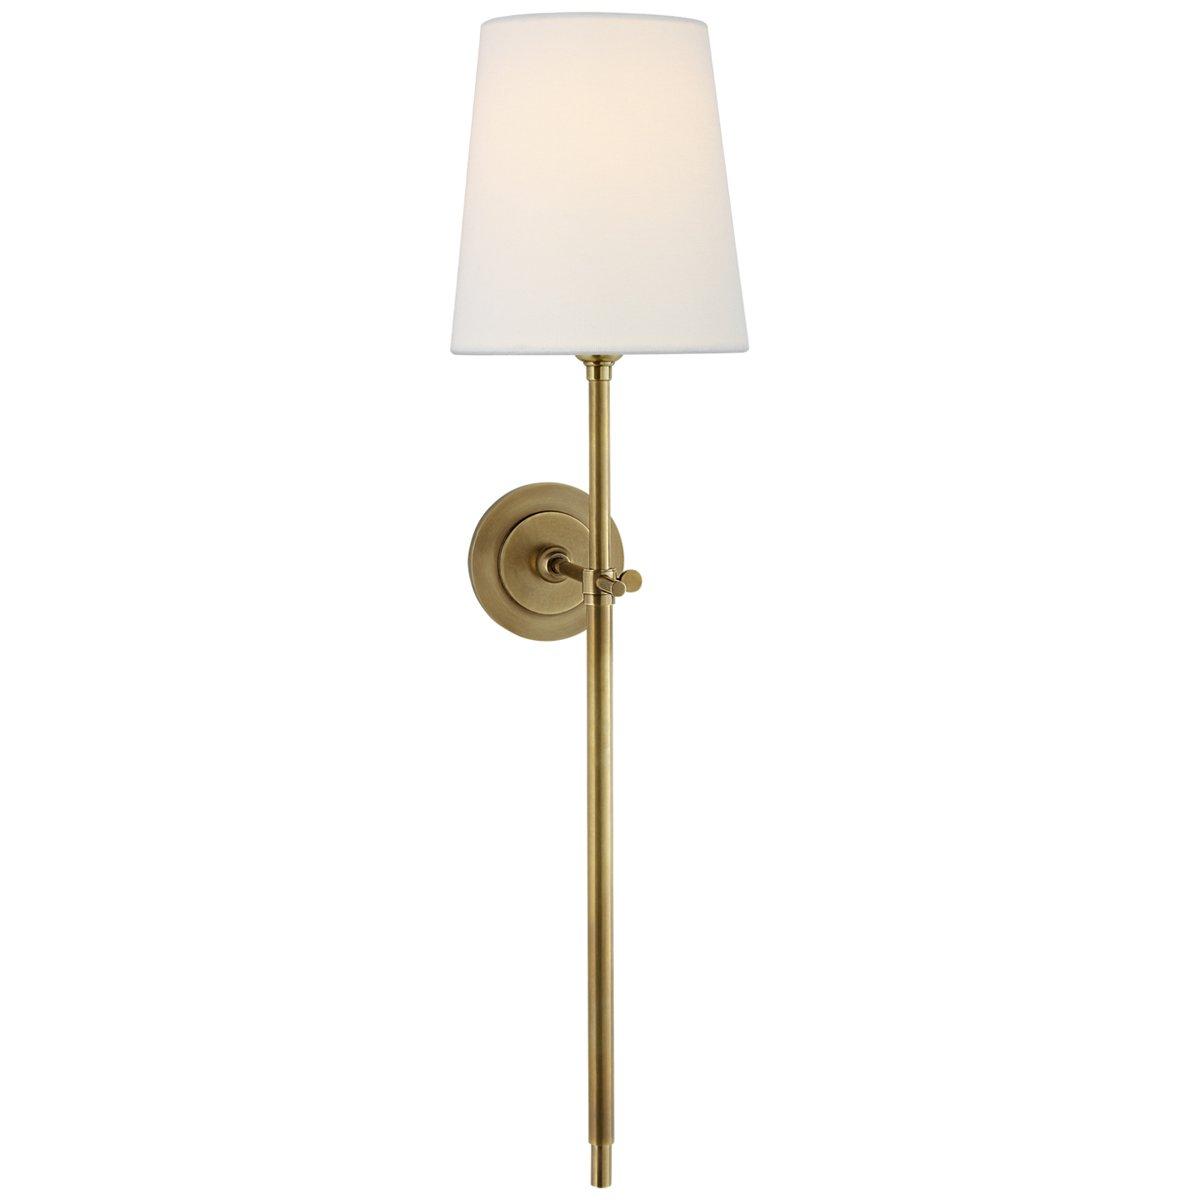 5029AB / Flemish - Floor Lamp, Antique Brass, Mink / LBS015BA9205